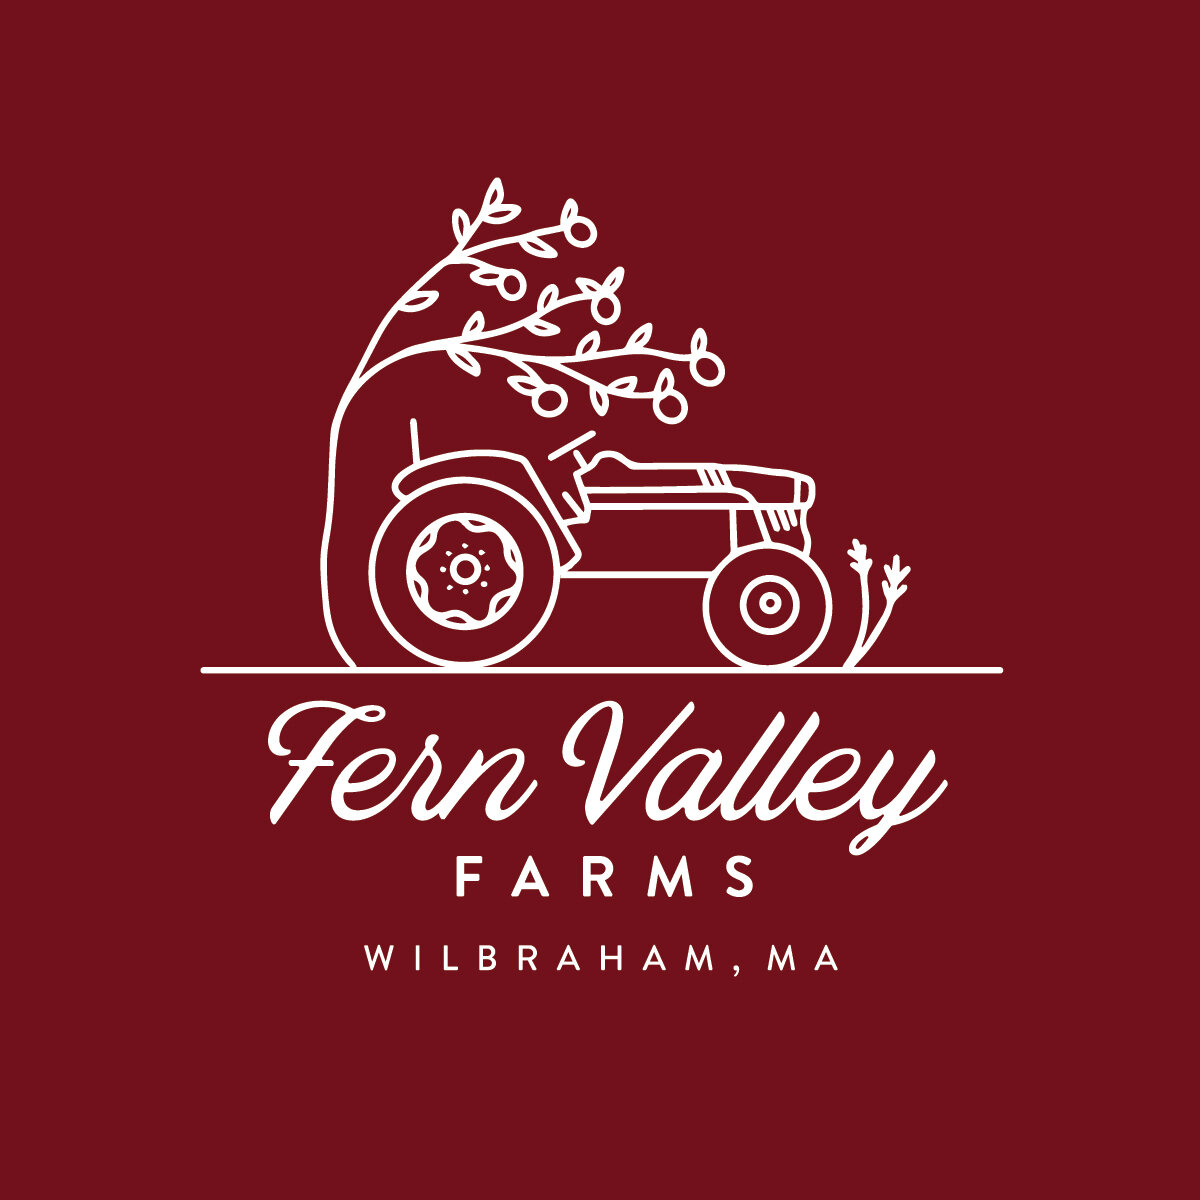 Fern Valley Farm Logo - White on Maroon.jpg